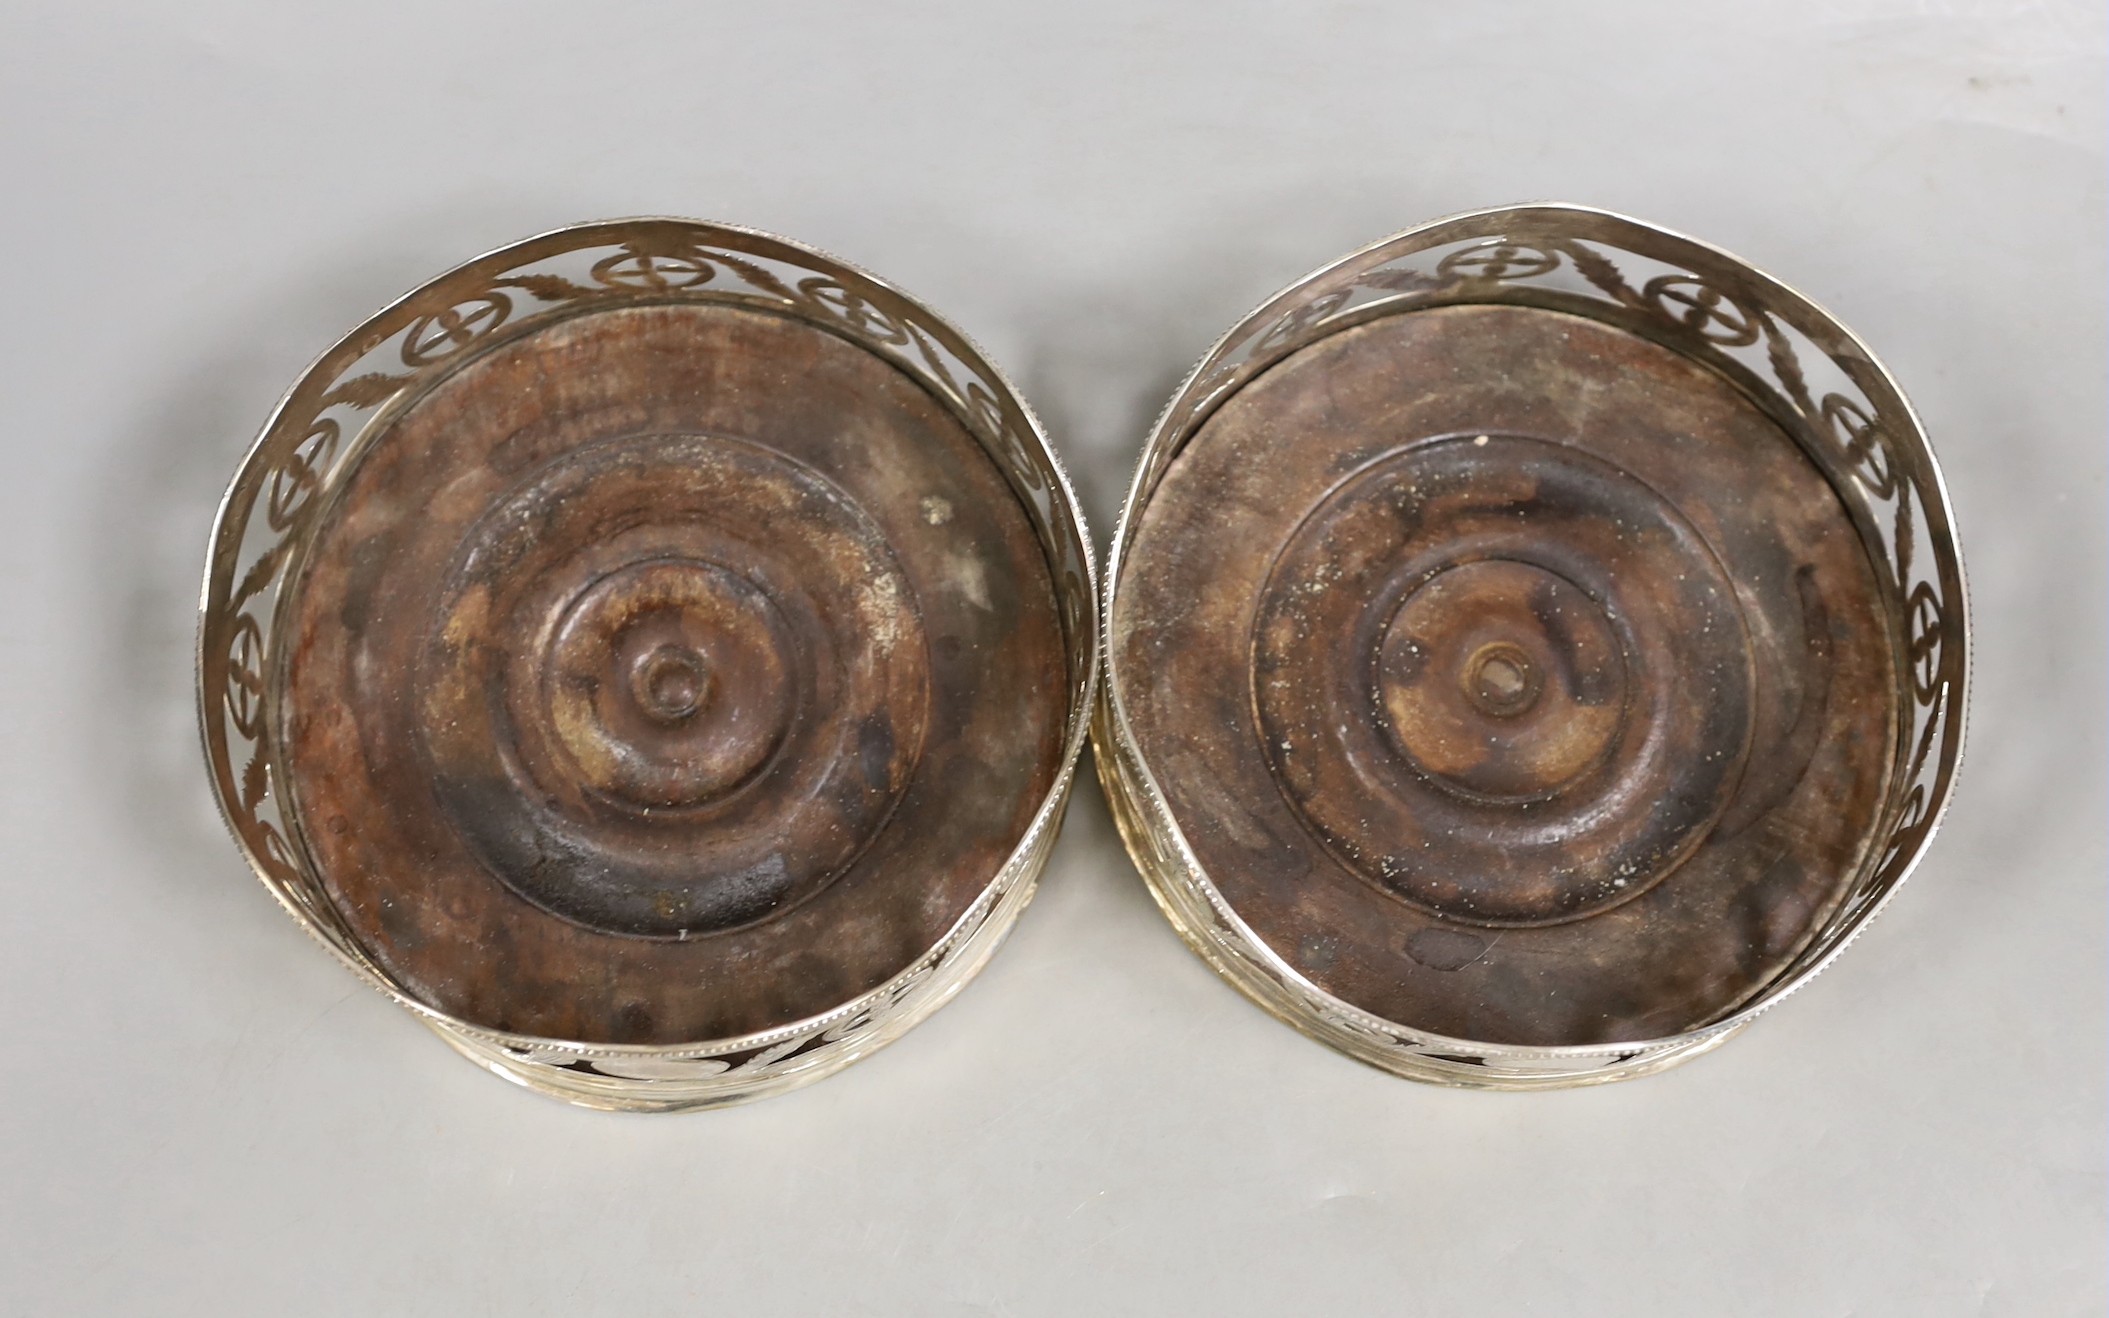 A pair of George III pierced silver wine coasters, maker's mark rubbed, London, 1787,diameter 12.8cm.